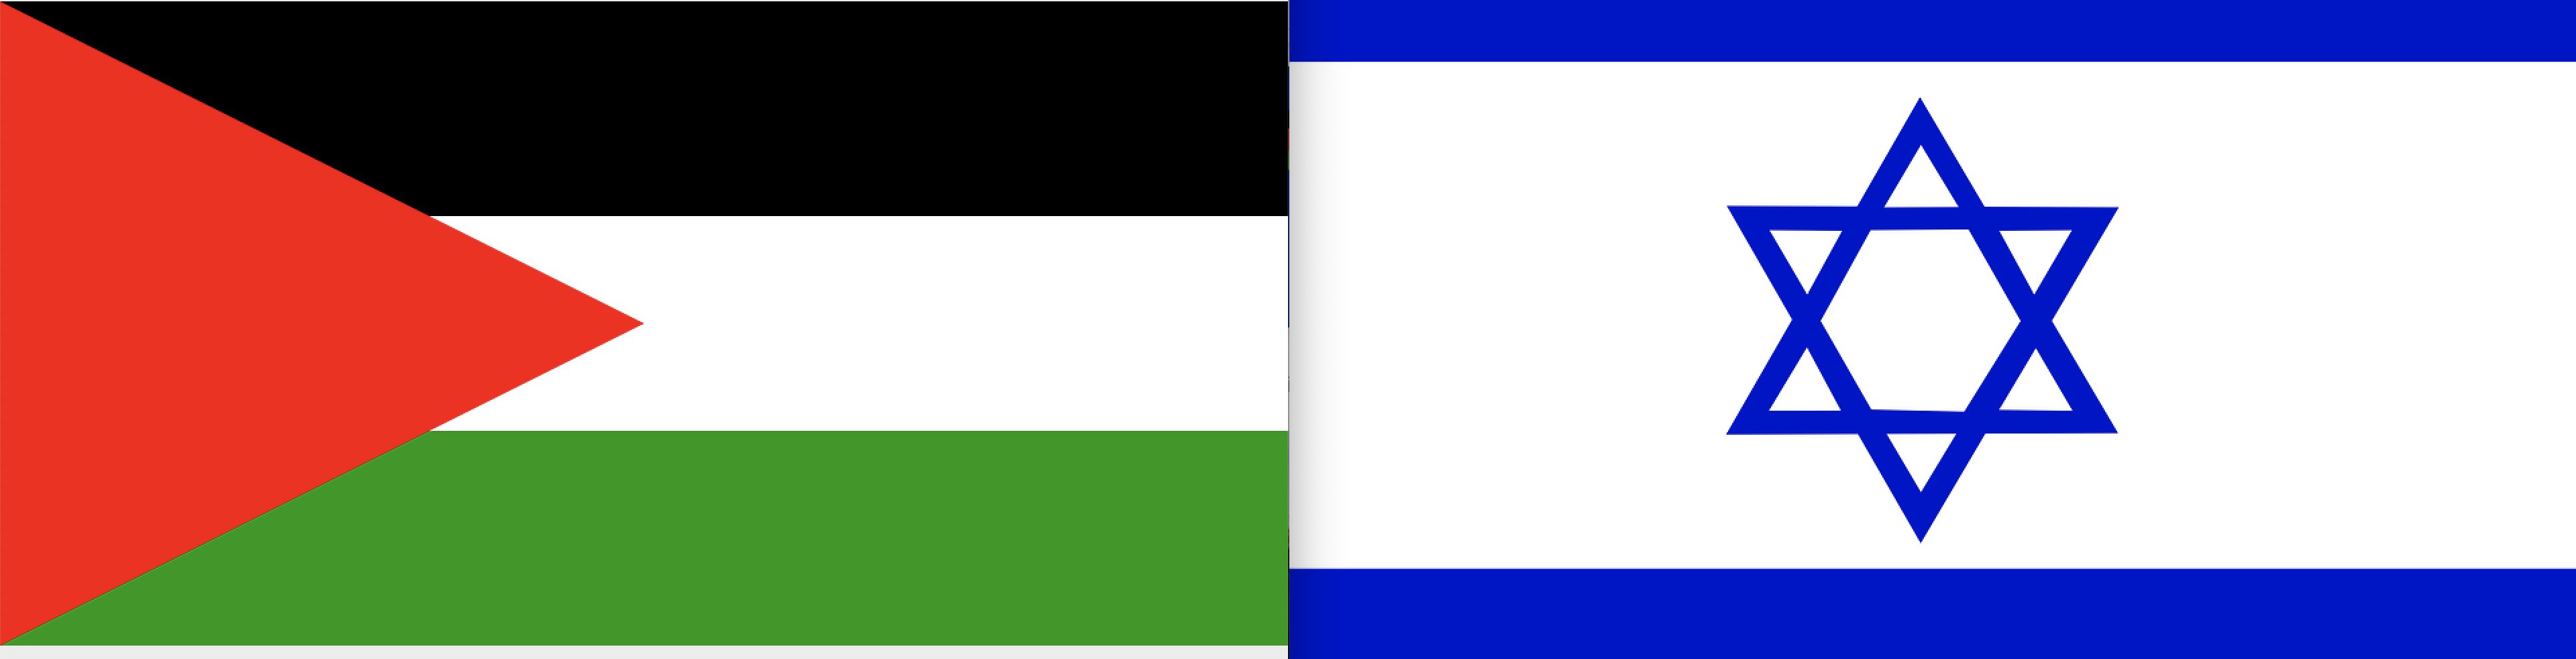 bandiere Israele-Palestina